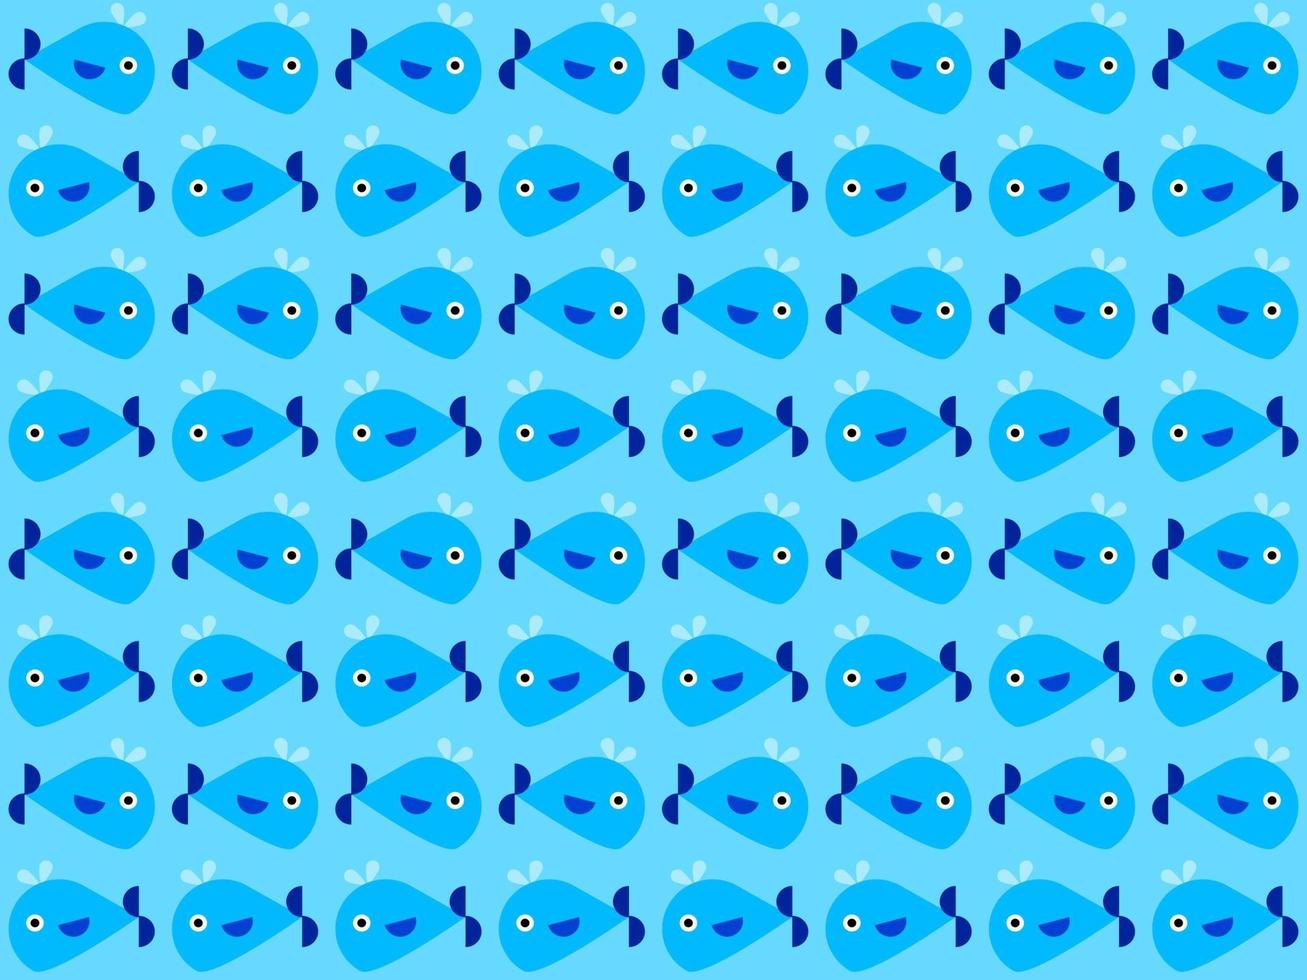 val seriefigur mönster på blå bakgrund vektor